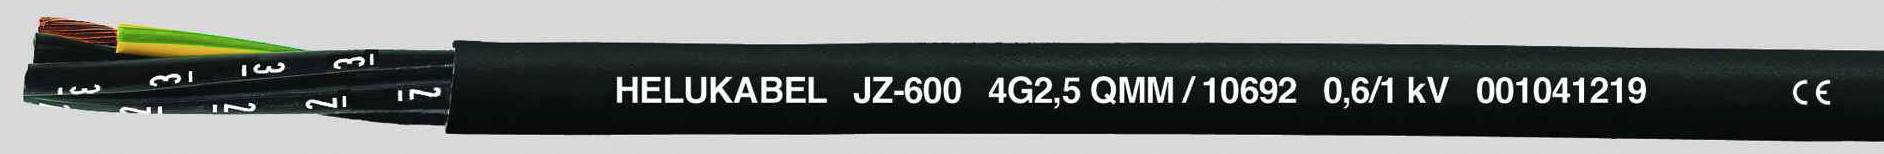 HELUKABEL JZ-600 Steuerleitung 4 G 1.50 mm² Schwarz 10659-1000 1000 m